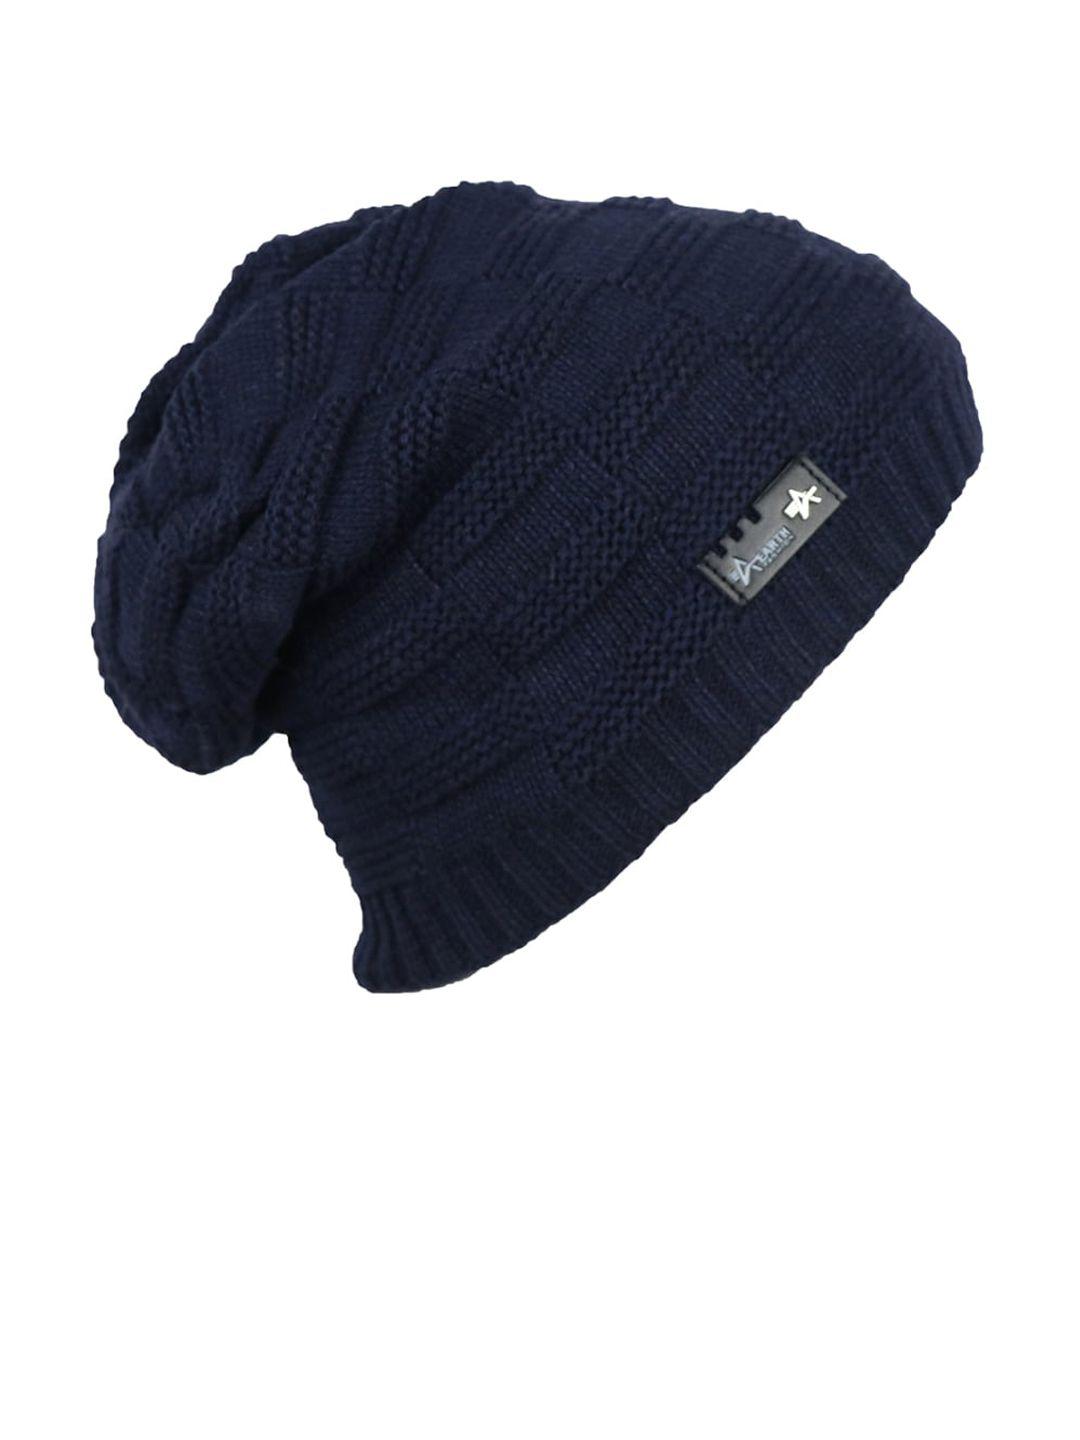 isweven-unisex-navy-blue-self-design-beanie-cap